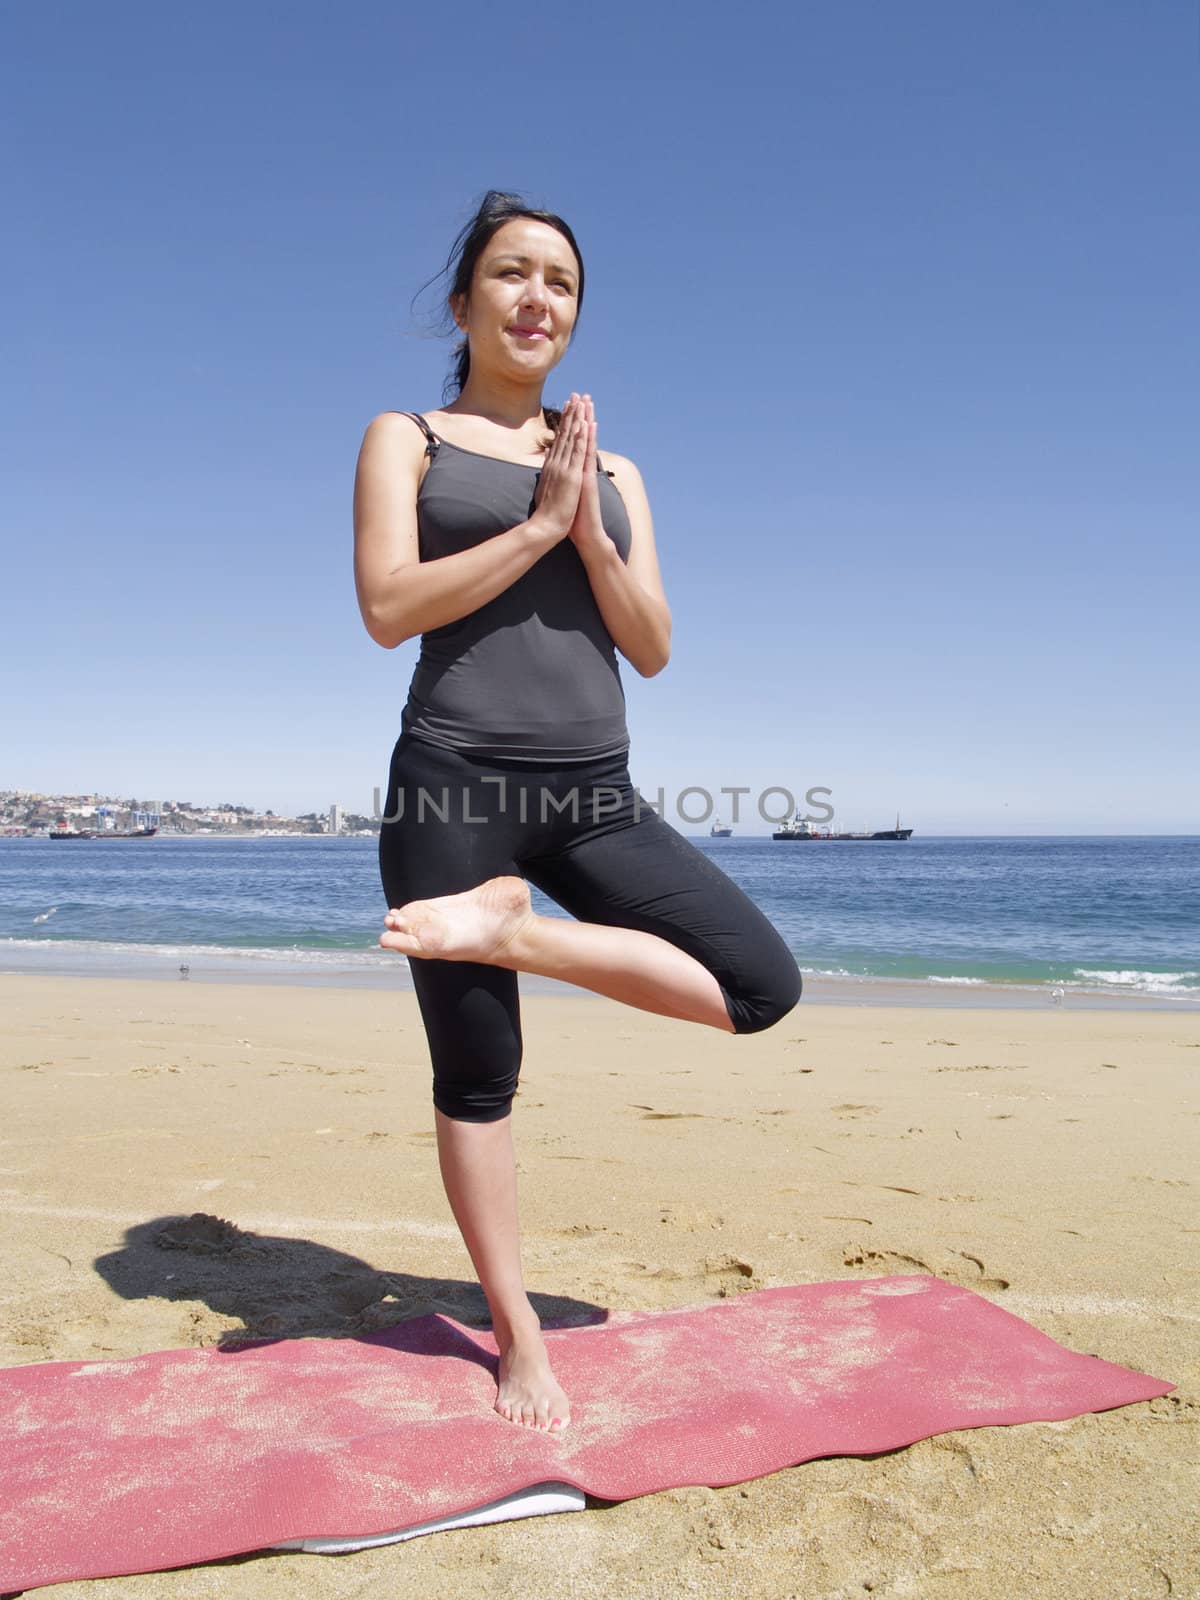 Bikram yoga tadasana pose at beach by fxegs